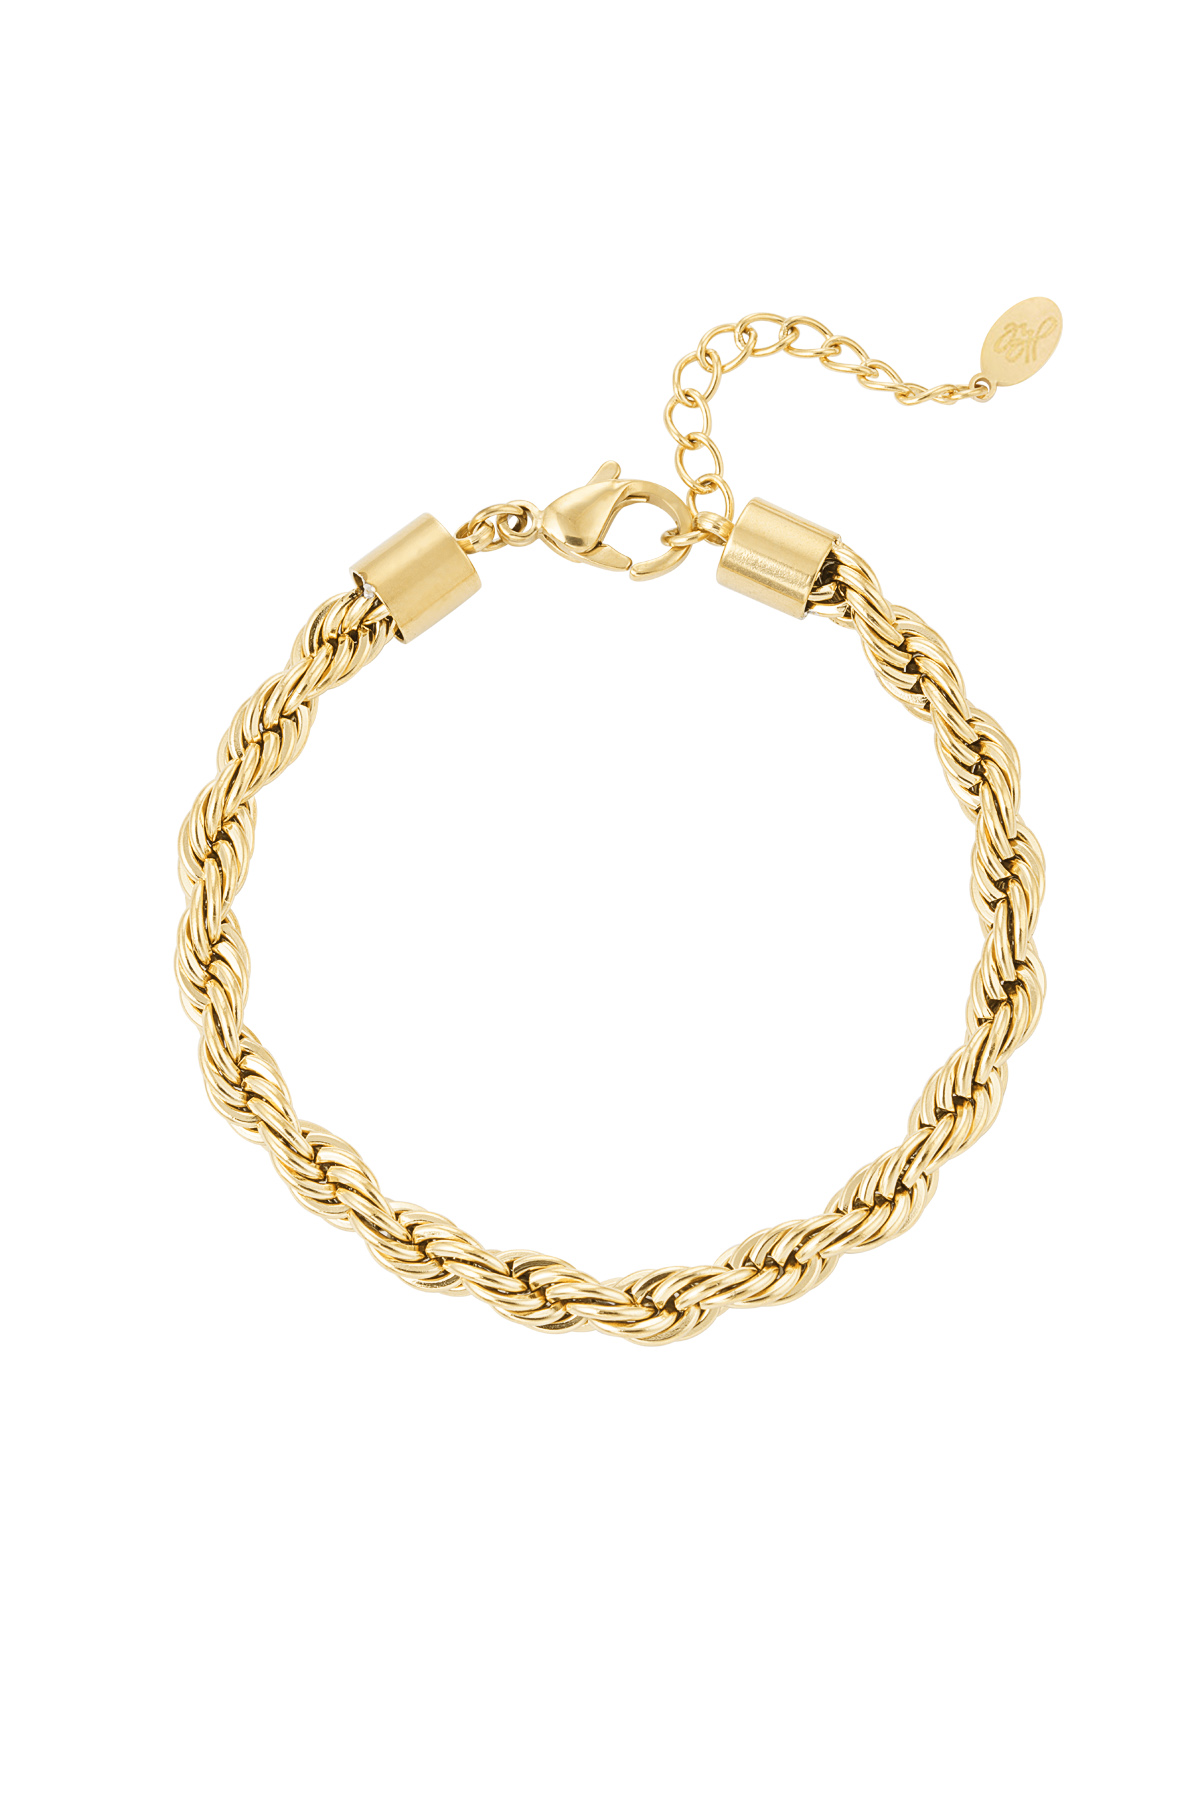 Unisex bracelet playful twist - gold